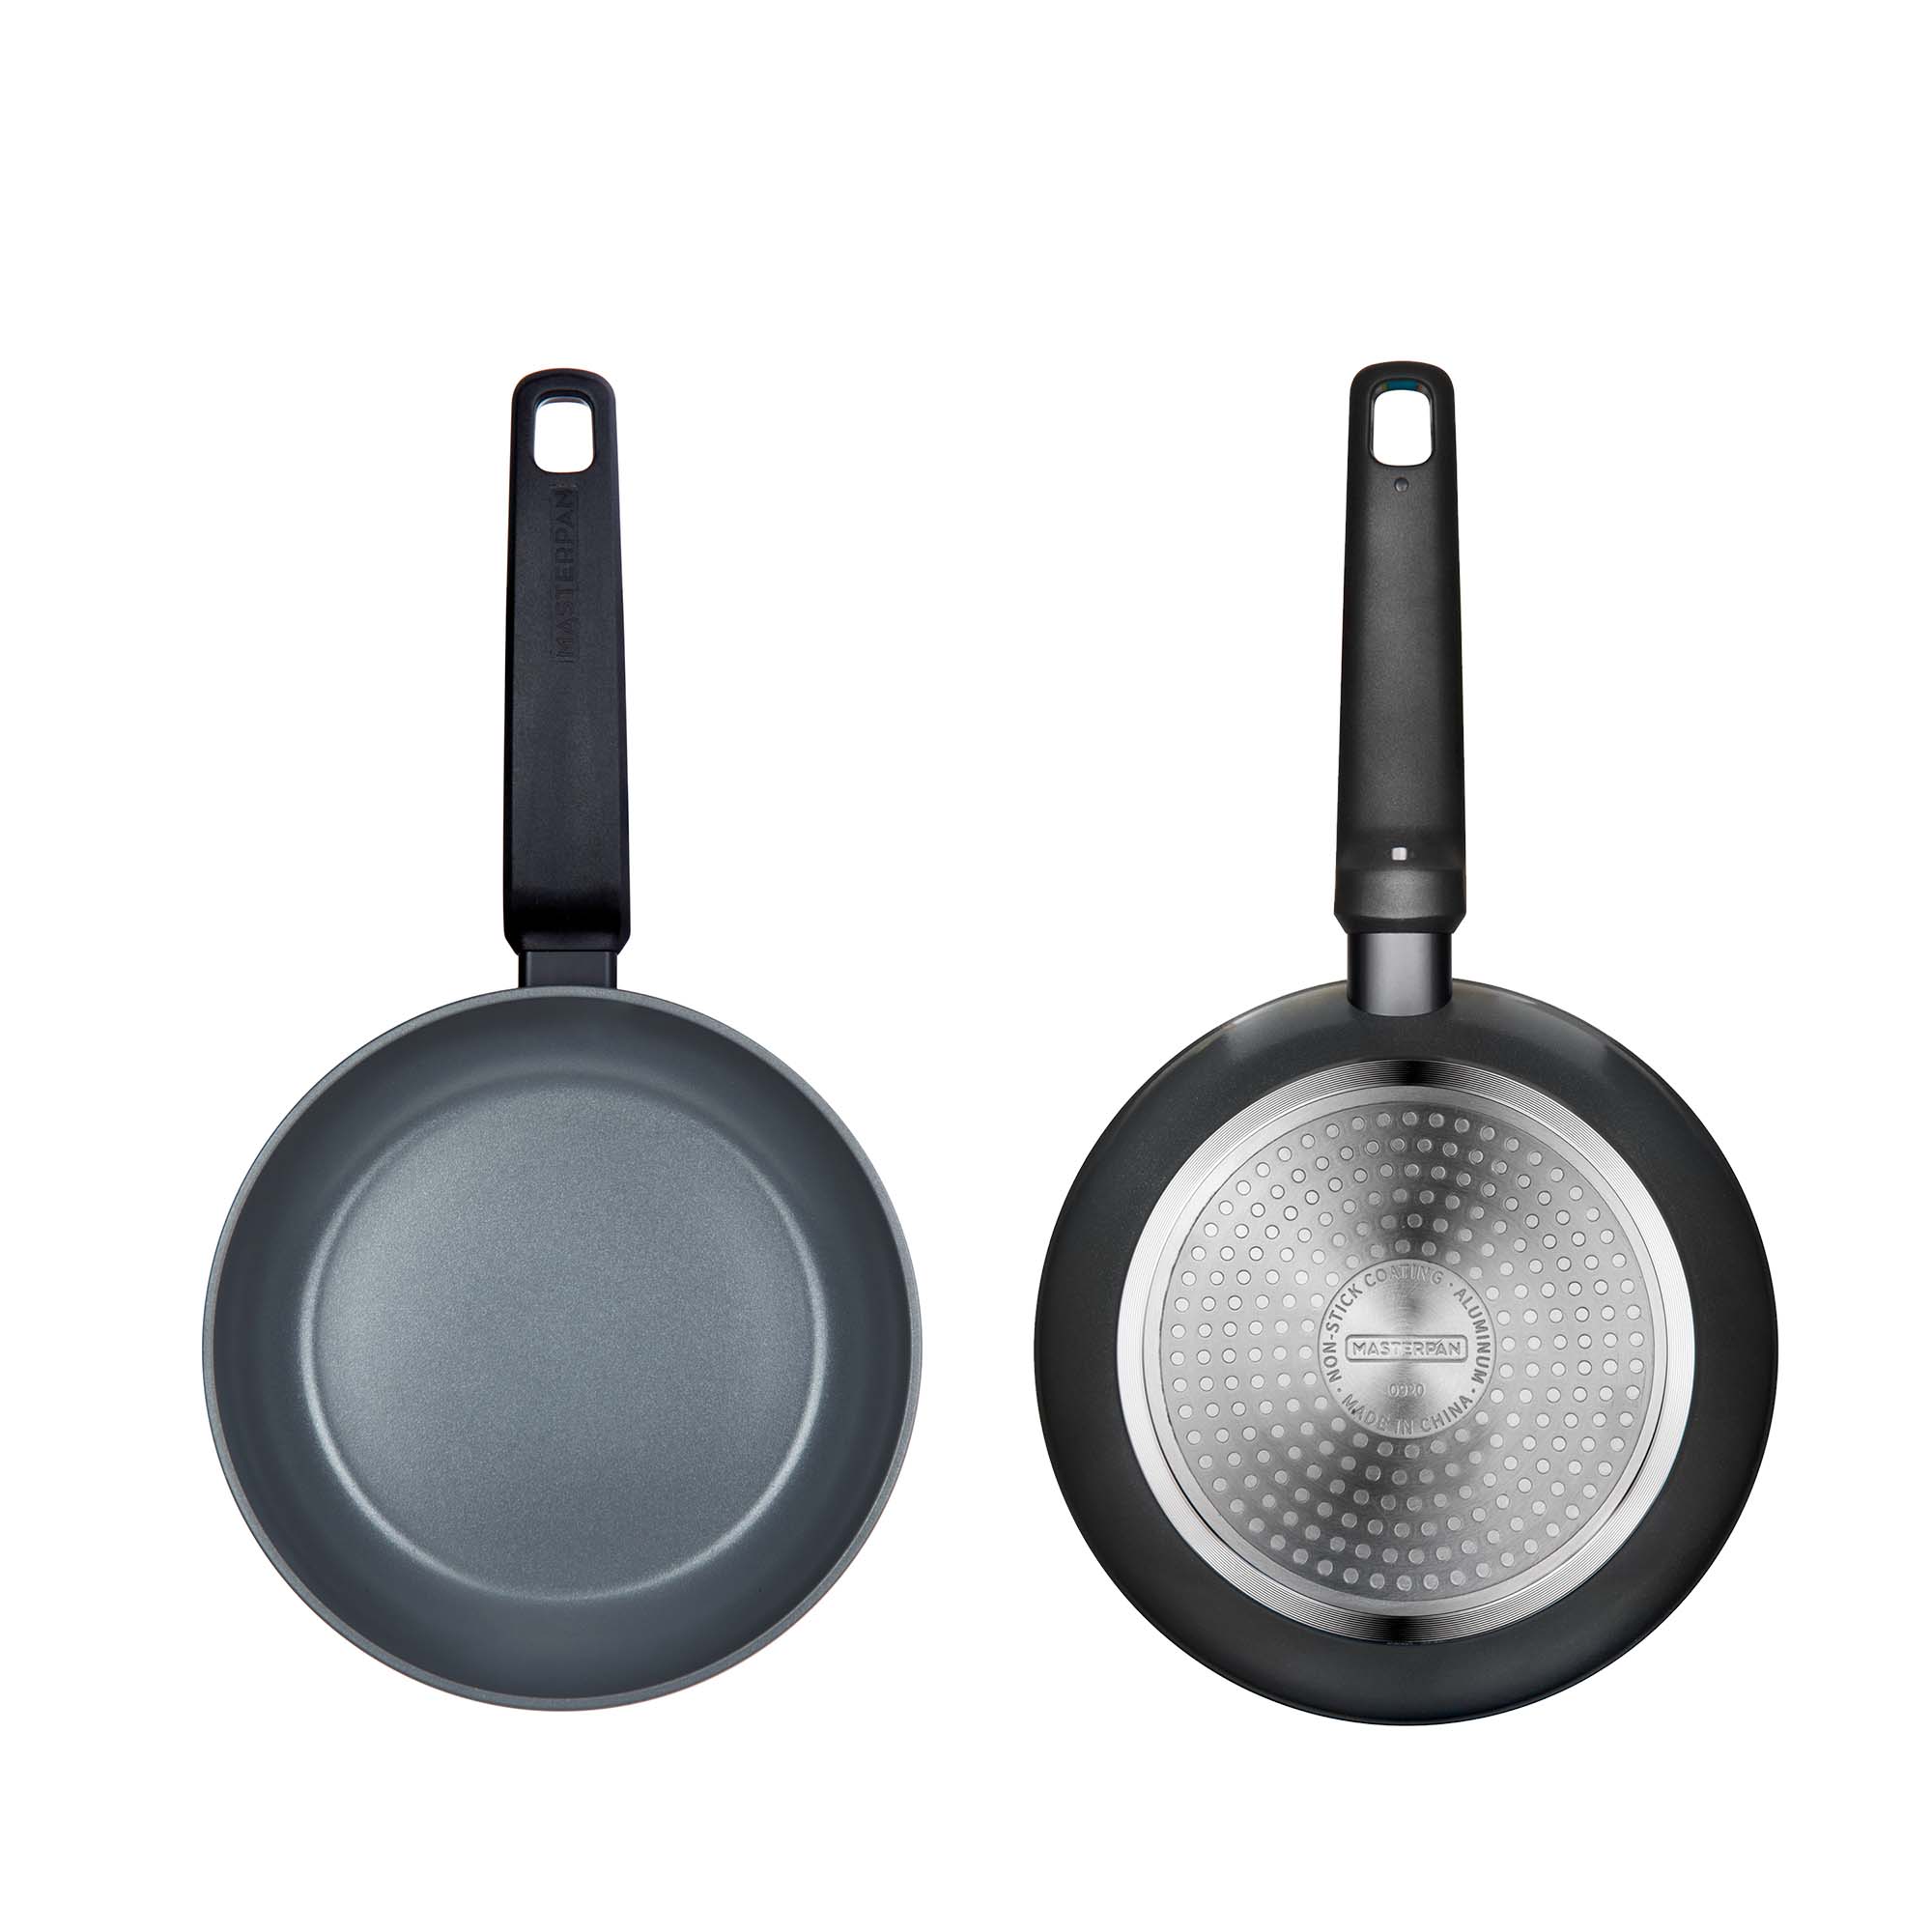 9.5 AL NONSTICK CREPE PAN – culinaryedge.com